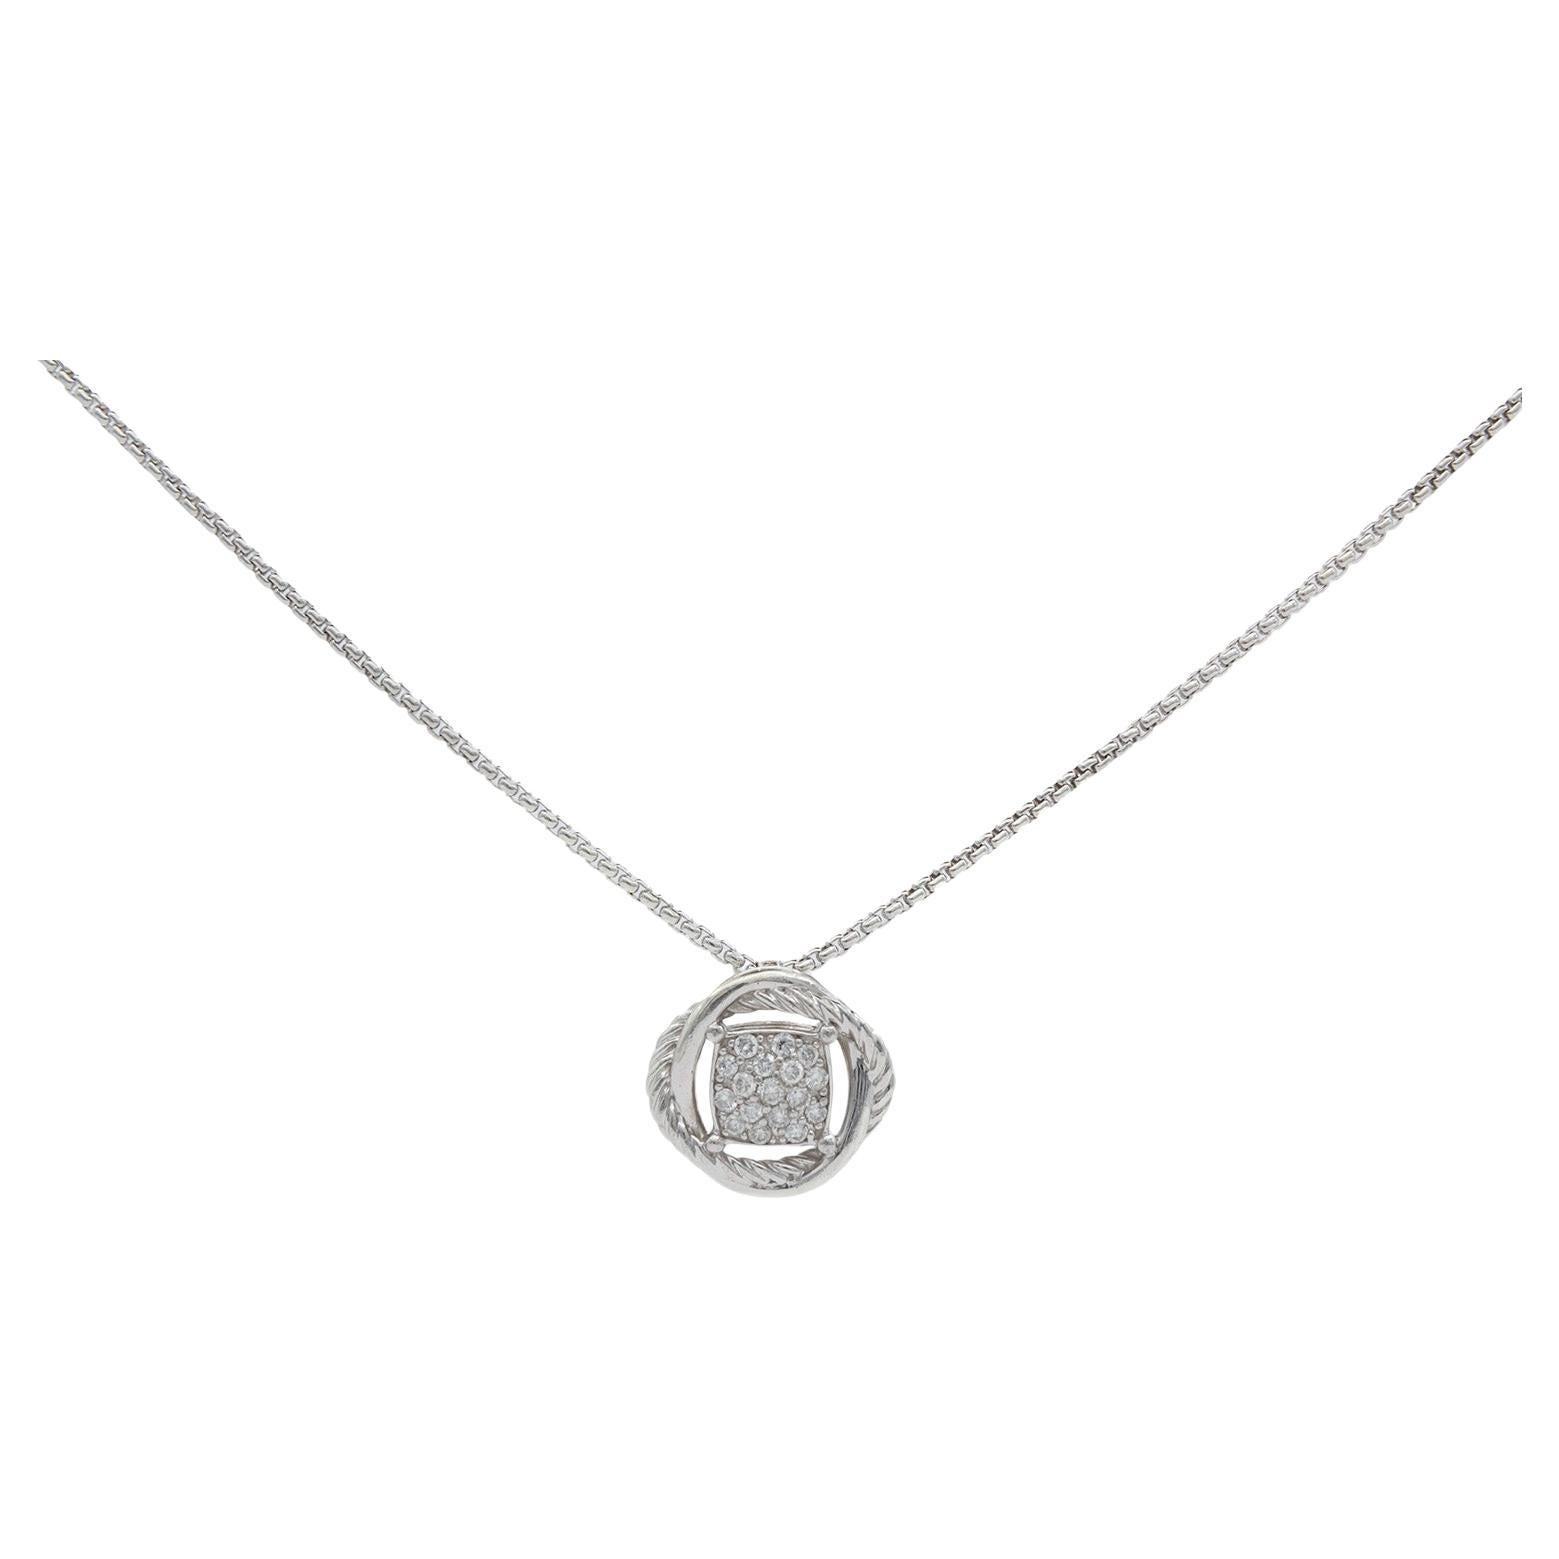 David Yurman Sterling Silver & Diamond Pave Infinity Cable Necklace Pendant